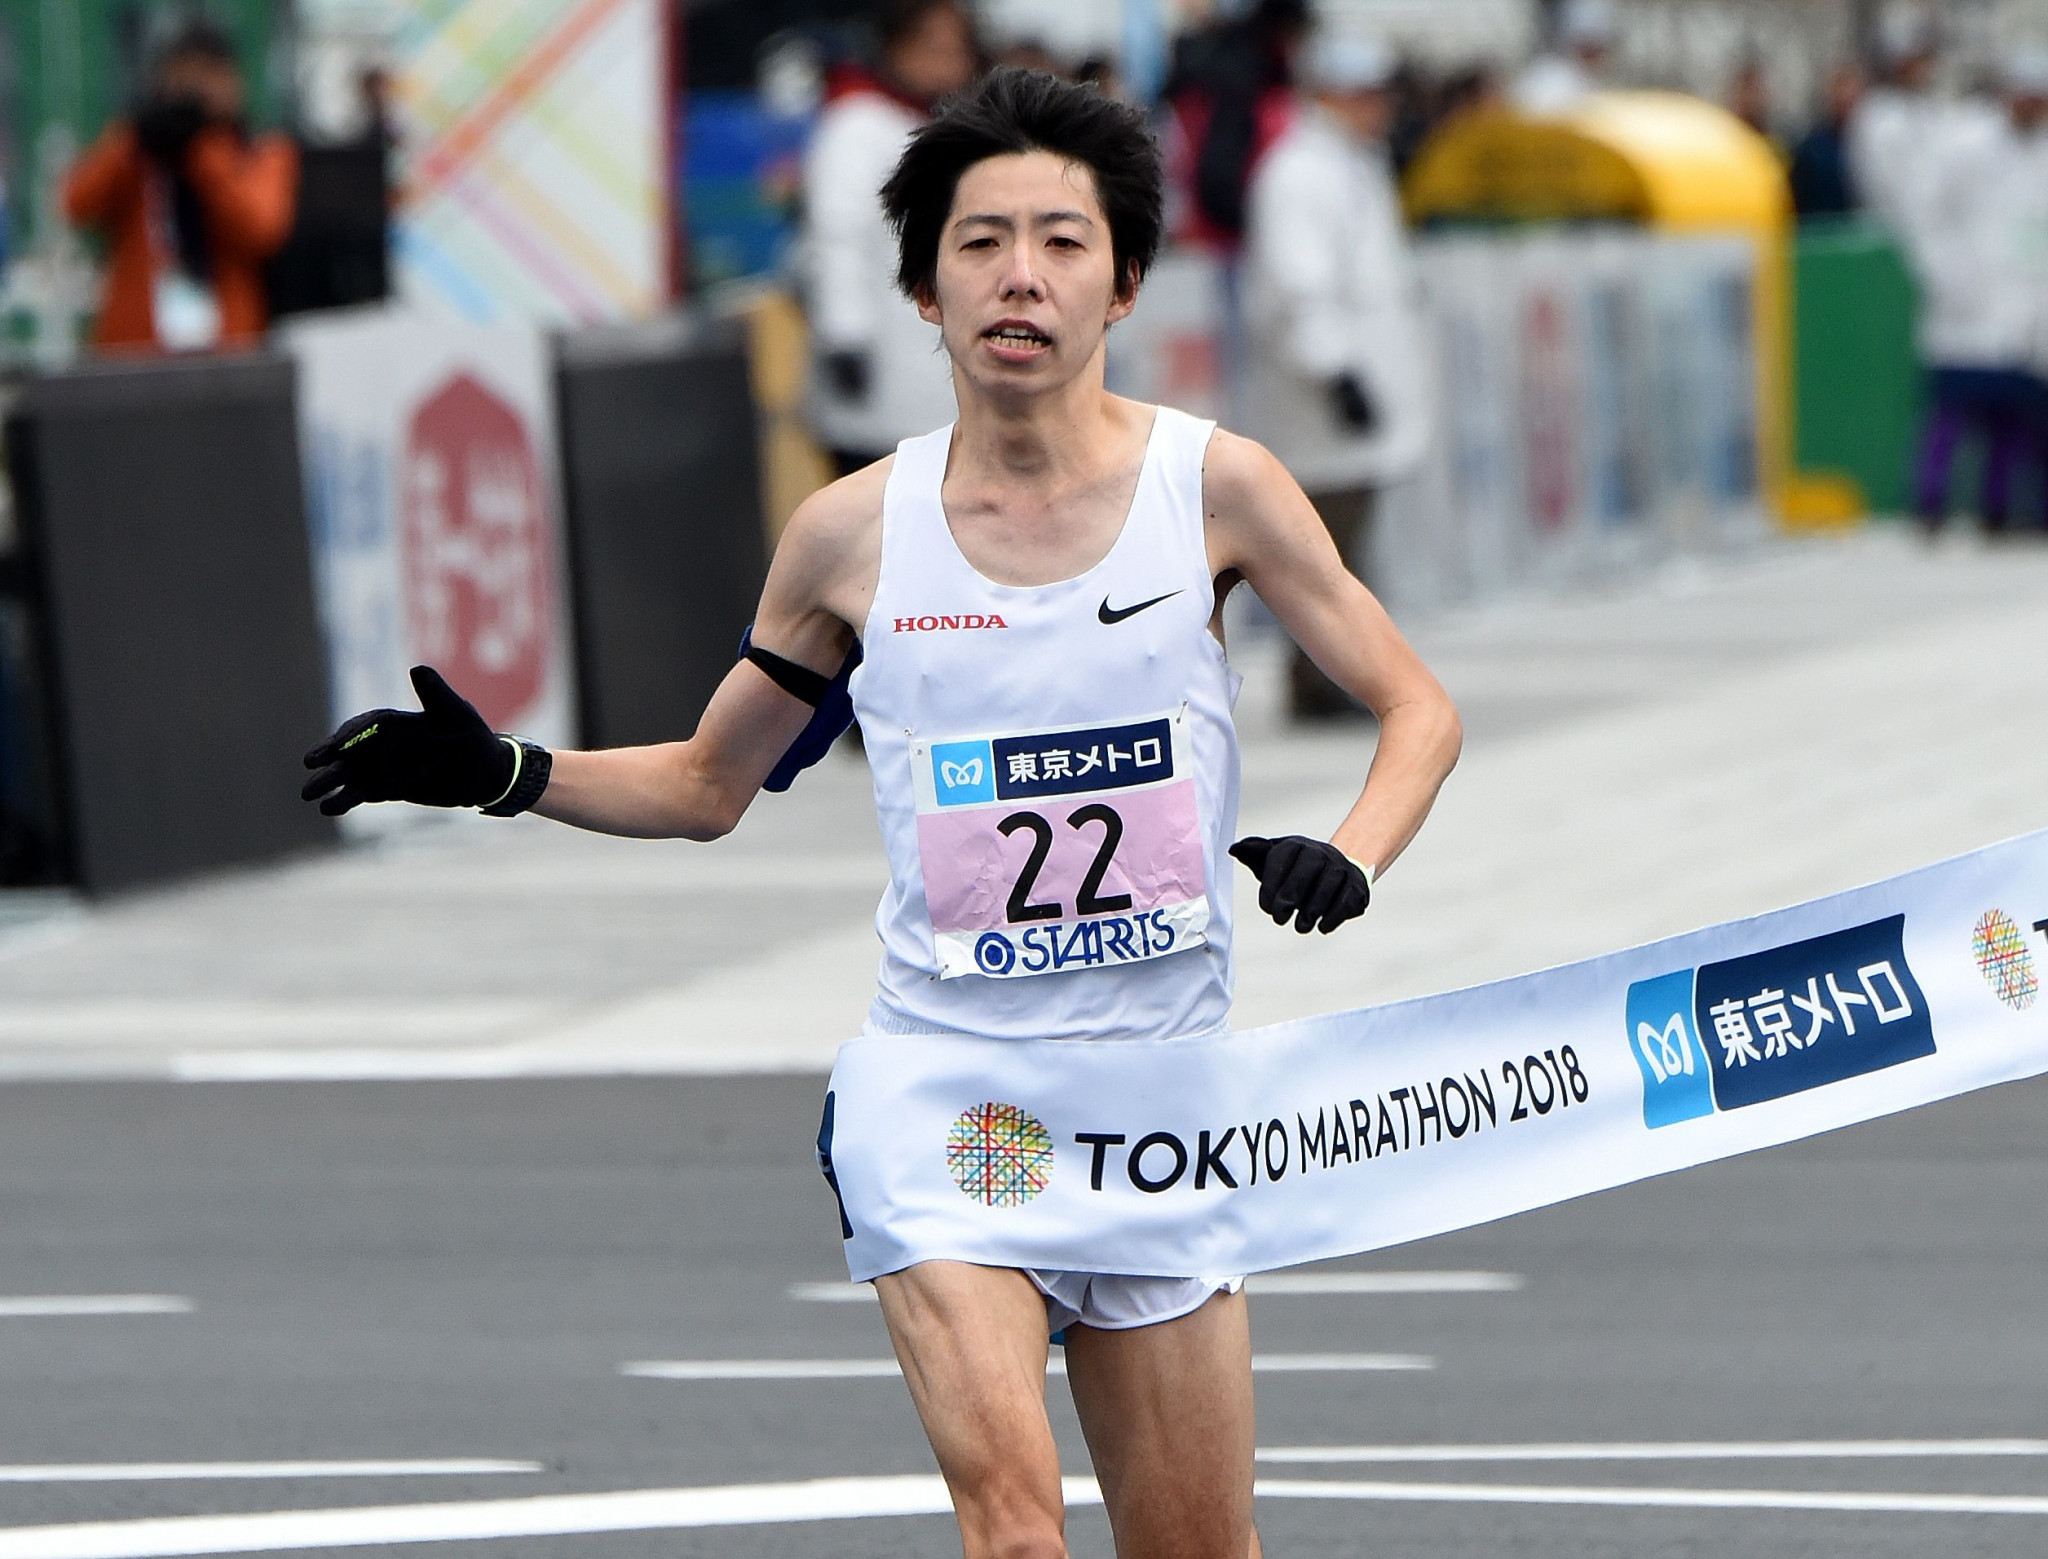 Marathon Grand Championship offering Tokyo 2020 incentive